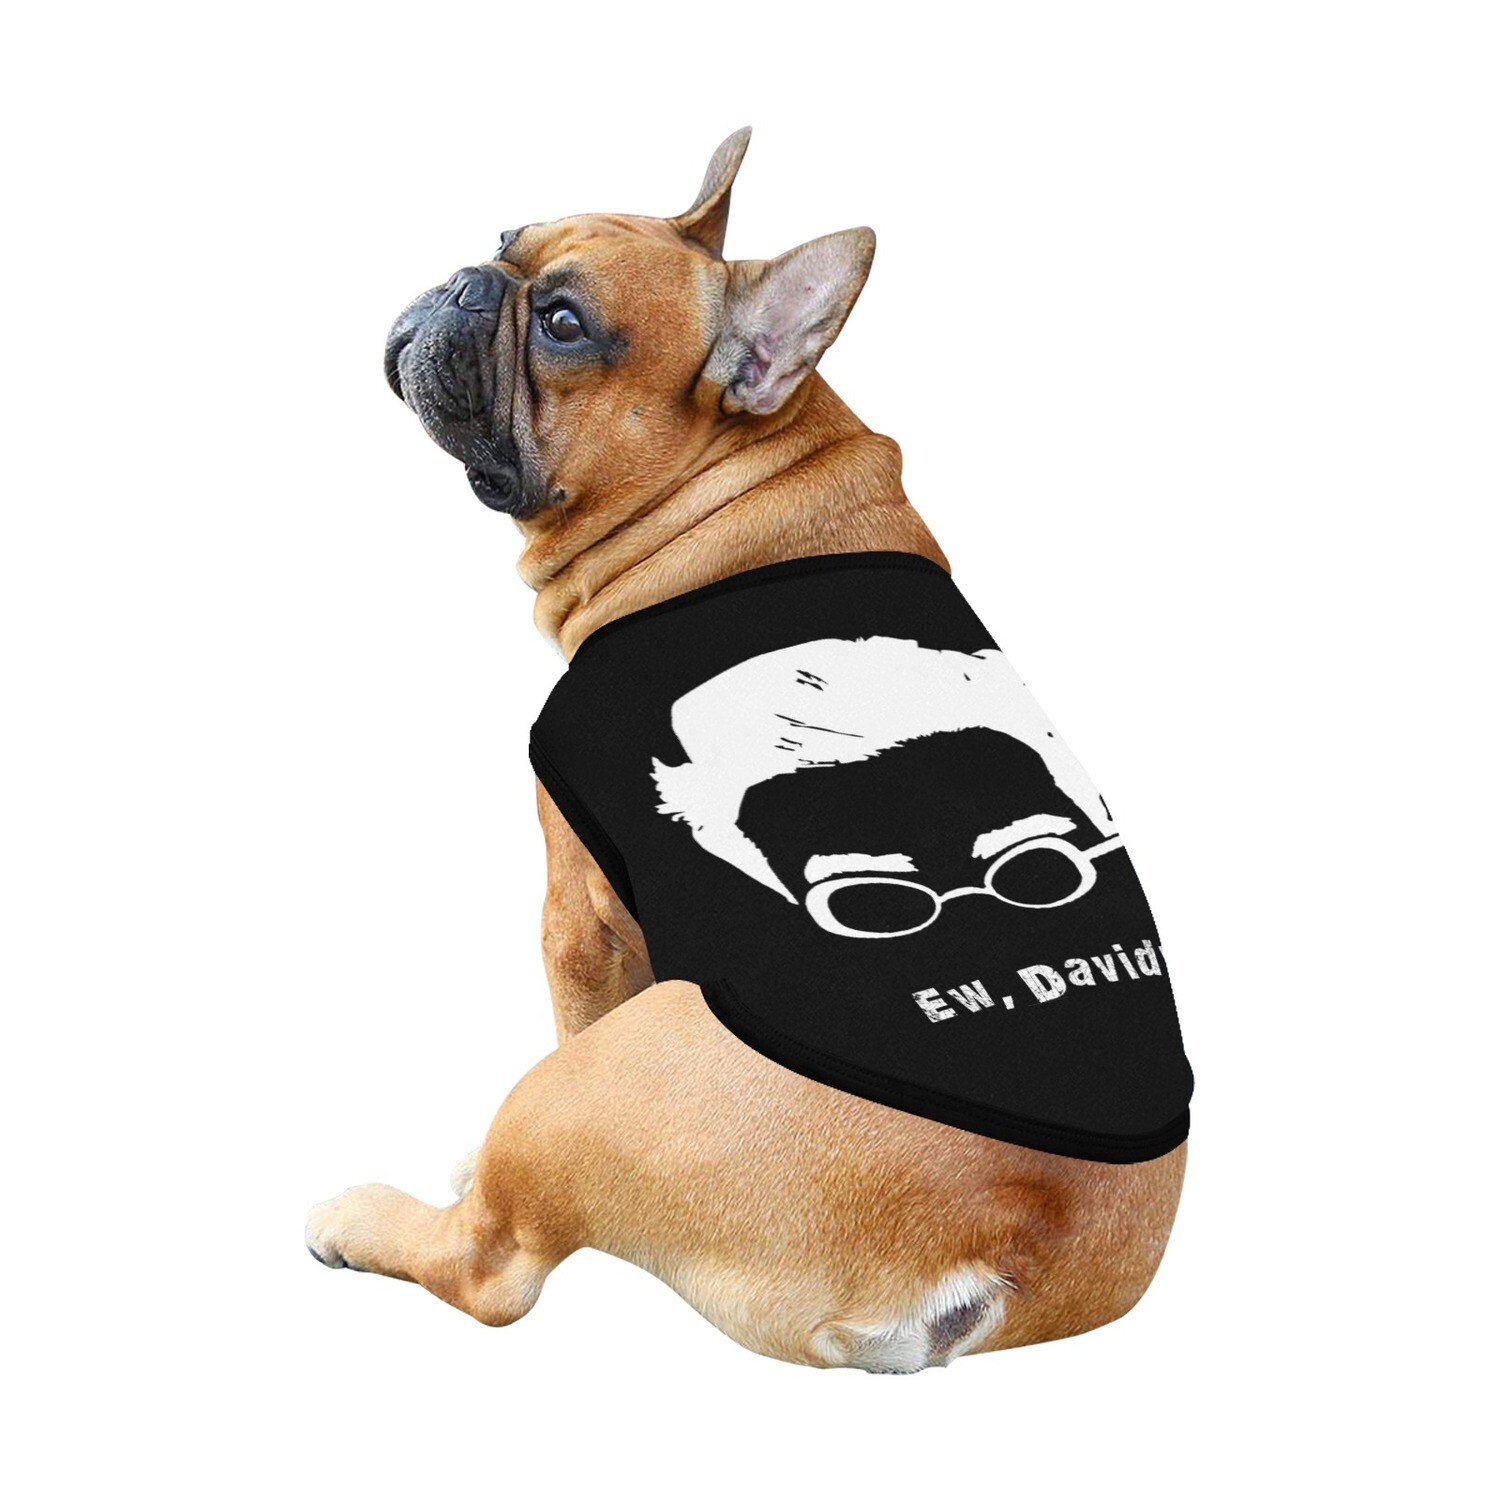 🐕 David Rose silhouette Ew, David Dog t-shirt, Dog Tank Top, Dog shirt, Dog clothes, Gifts, front back print, 7 sizes XS to 3XL, Schitt's Creek, TV series